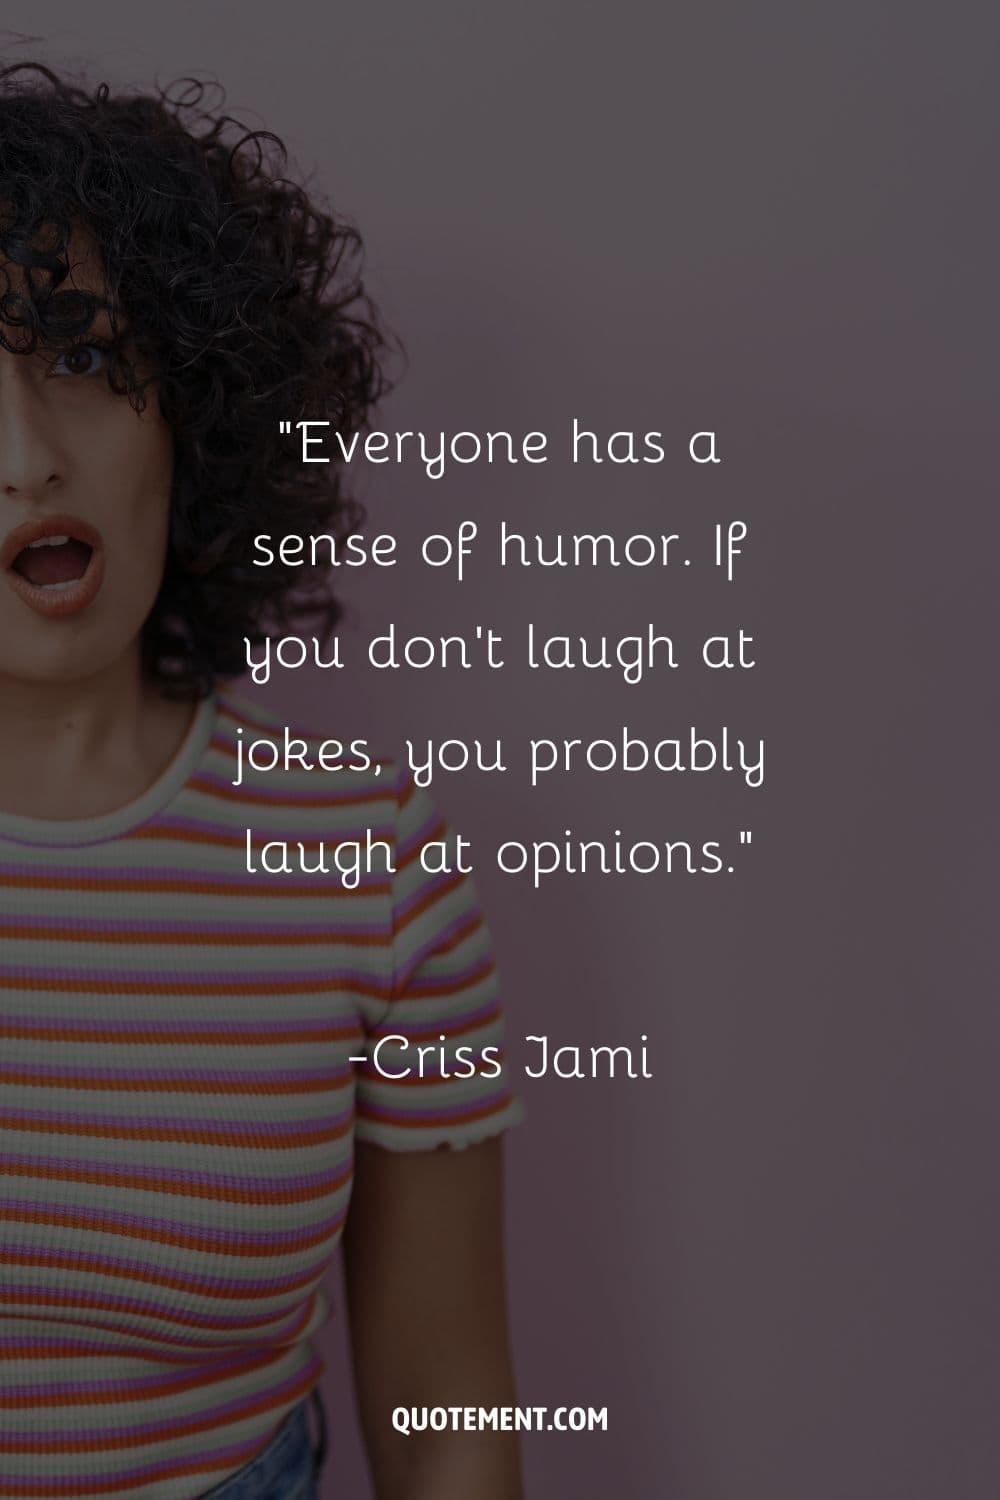 “Everyone has a sense of humor. If you don't laugh at jokes, you probably laugh at opinions.” ― Criss Jami, Killosophy